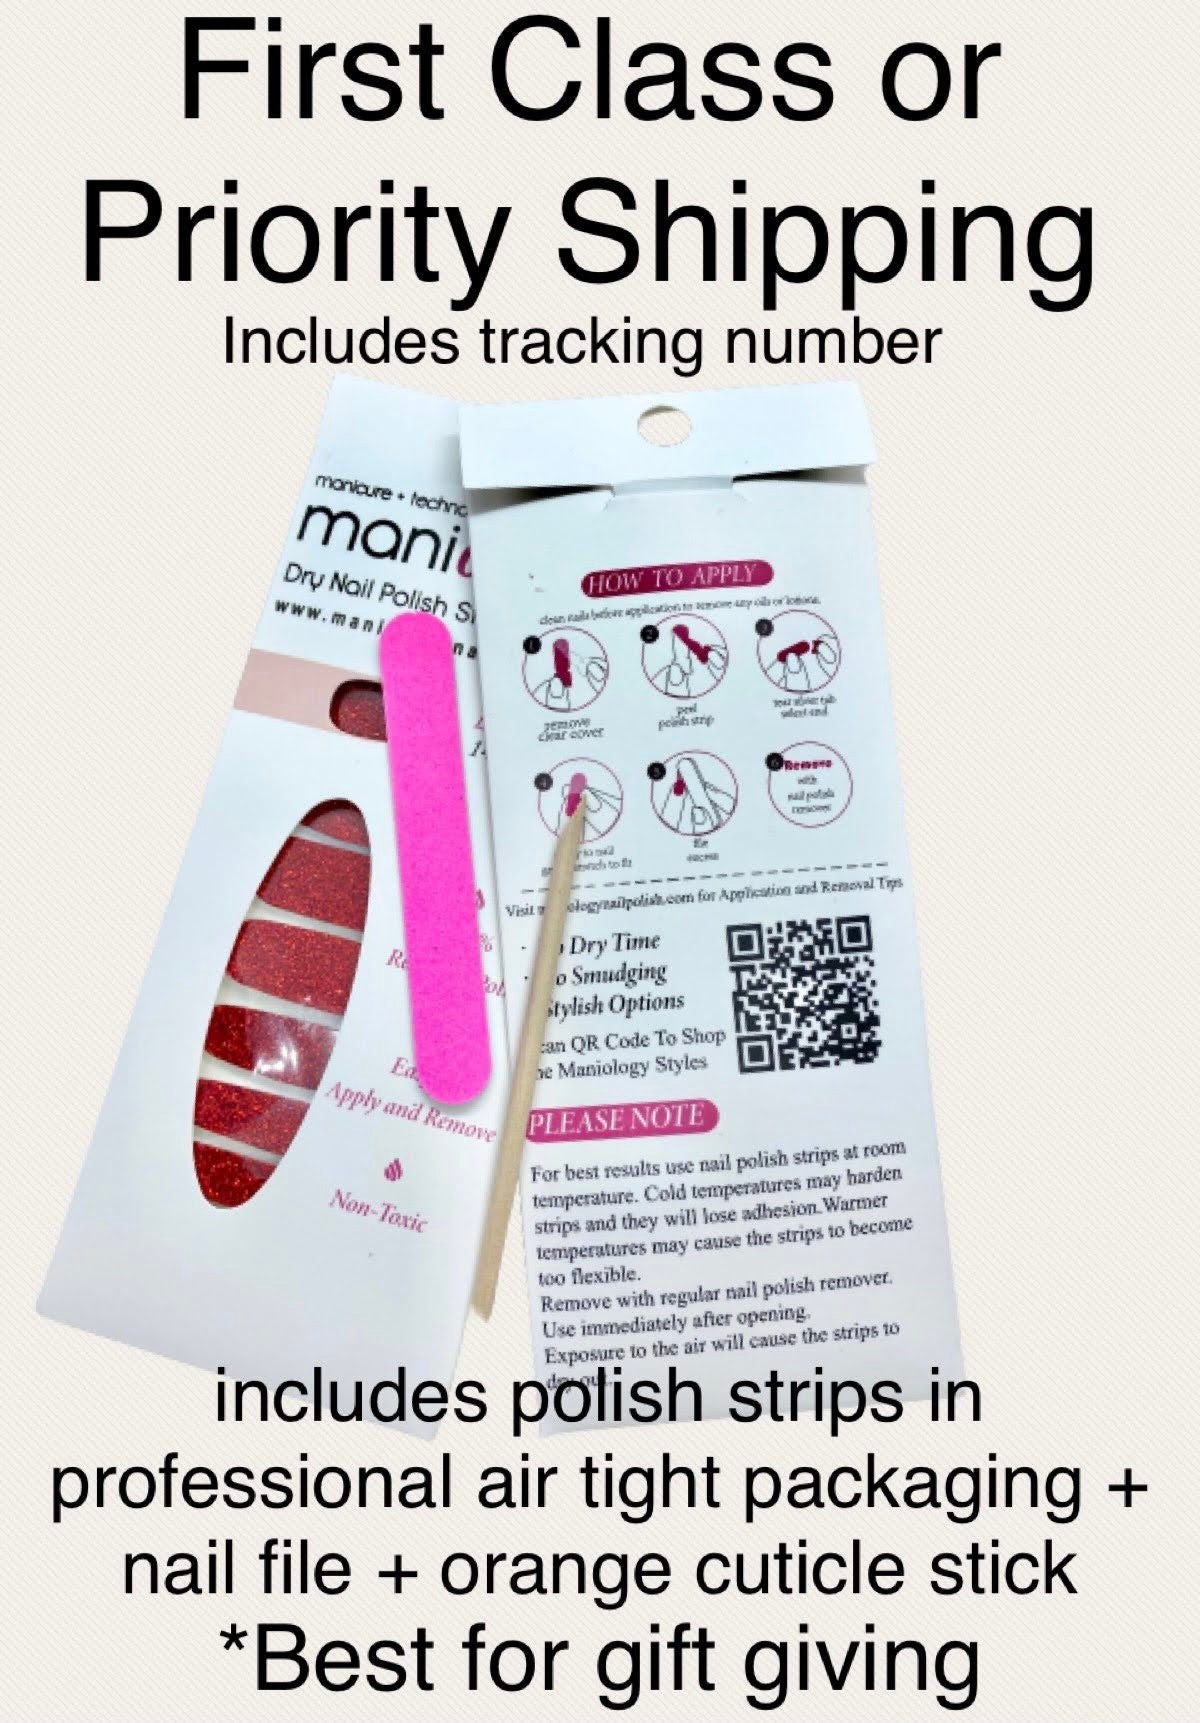 Pink/Purple Glitter, ManiCURE  Real Nail Polish Strips, Dry Nail Polish, Nail Wraps, Stickers, Long Lasting, Non Toxic - manicurenailpolish